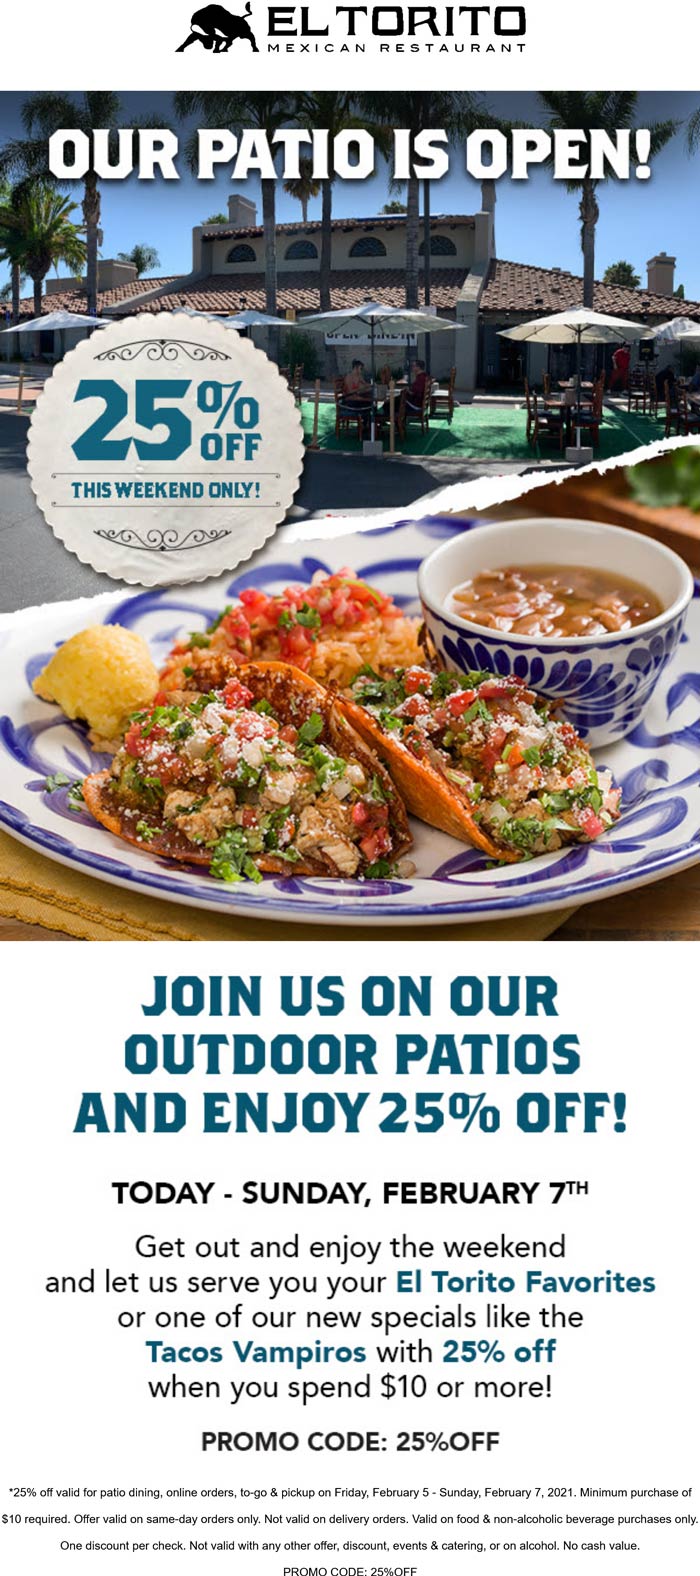 El Torito restaurants Coupon  25% off at El Torito Mexican restaurants via promo code 25%OFF #eltorito 